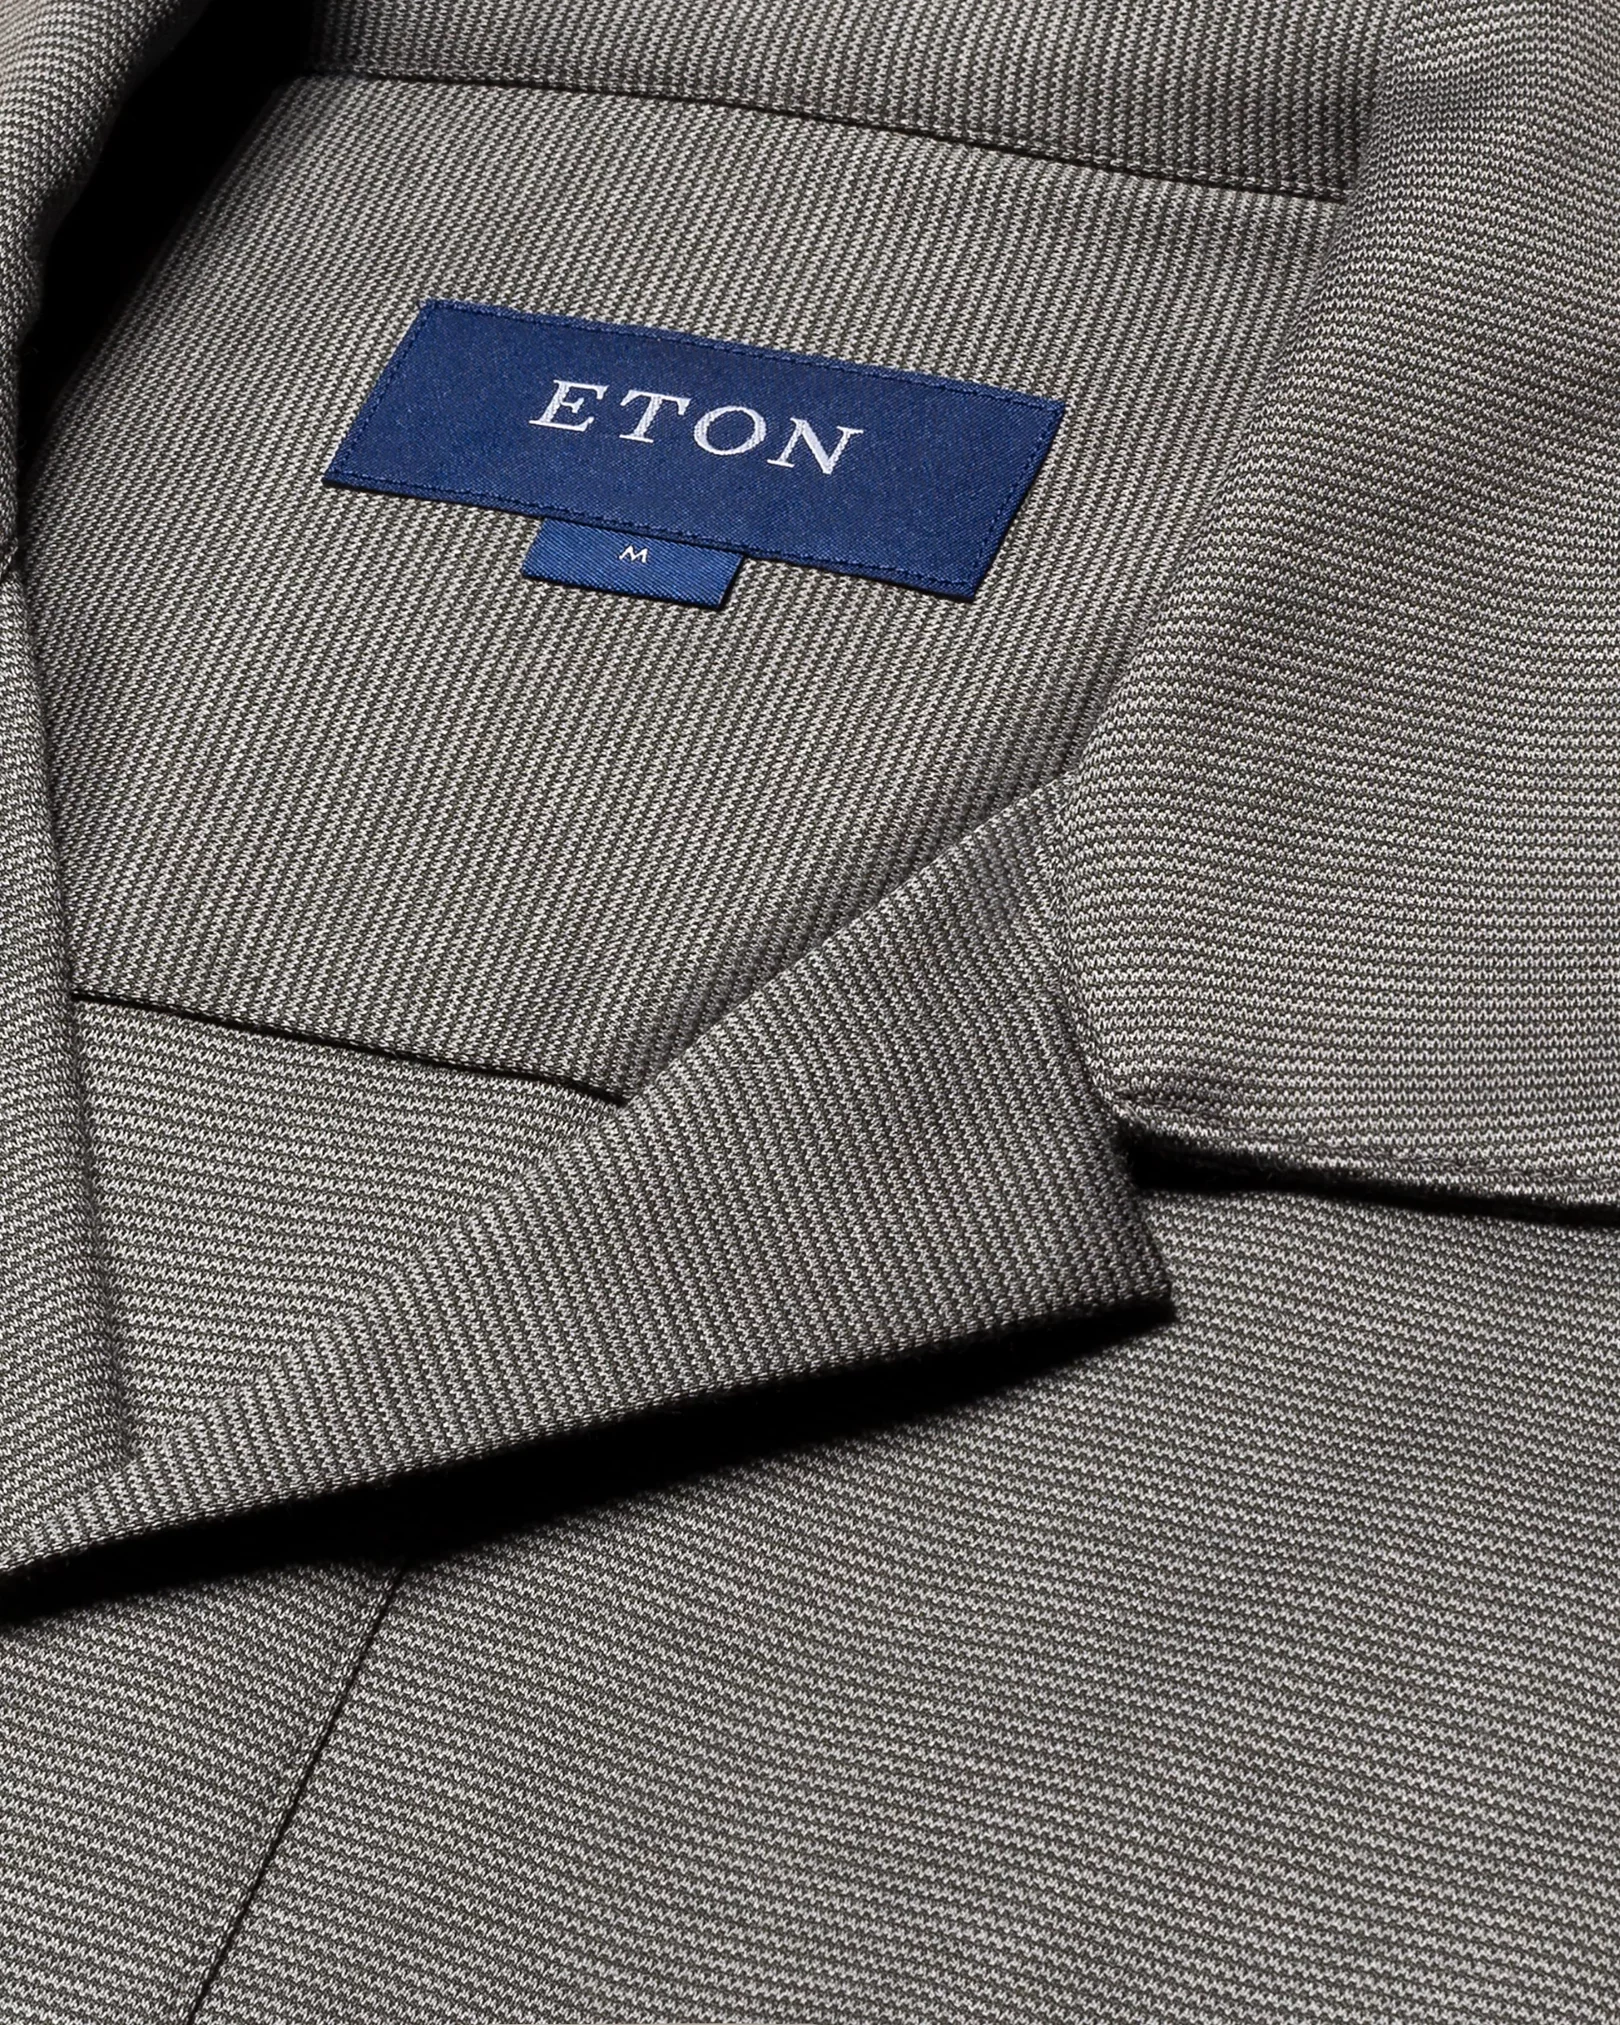 Eton - dark green interlock jersey open collar